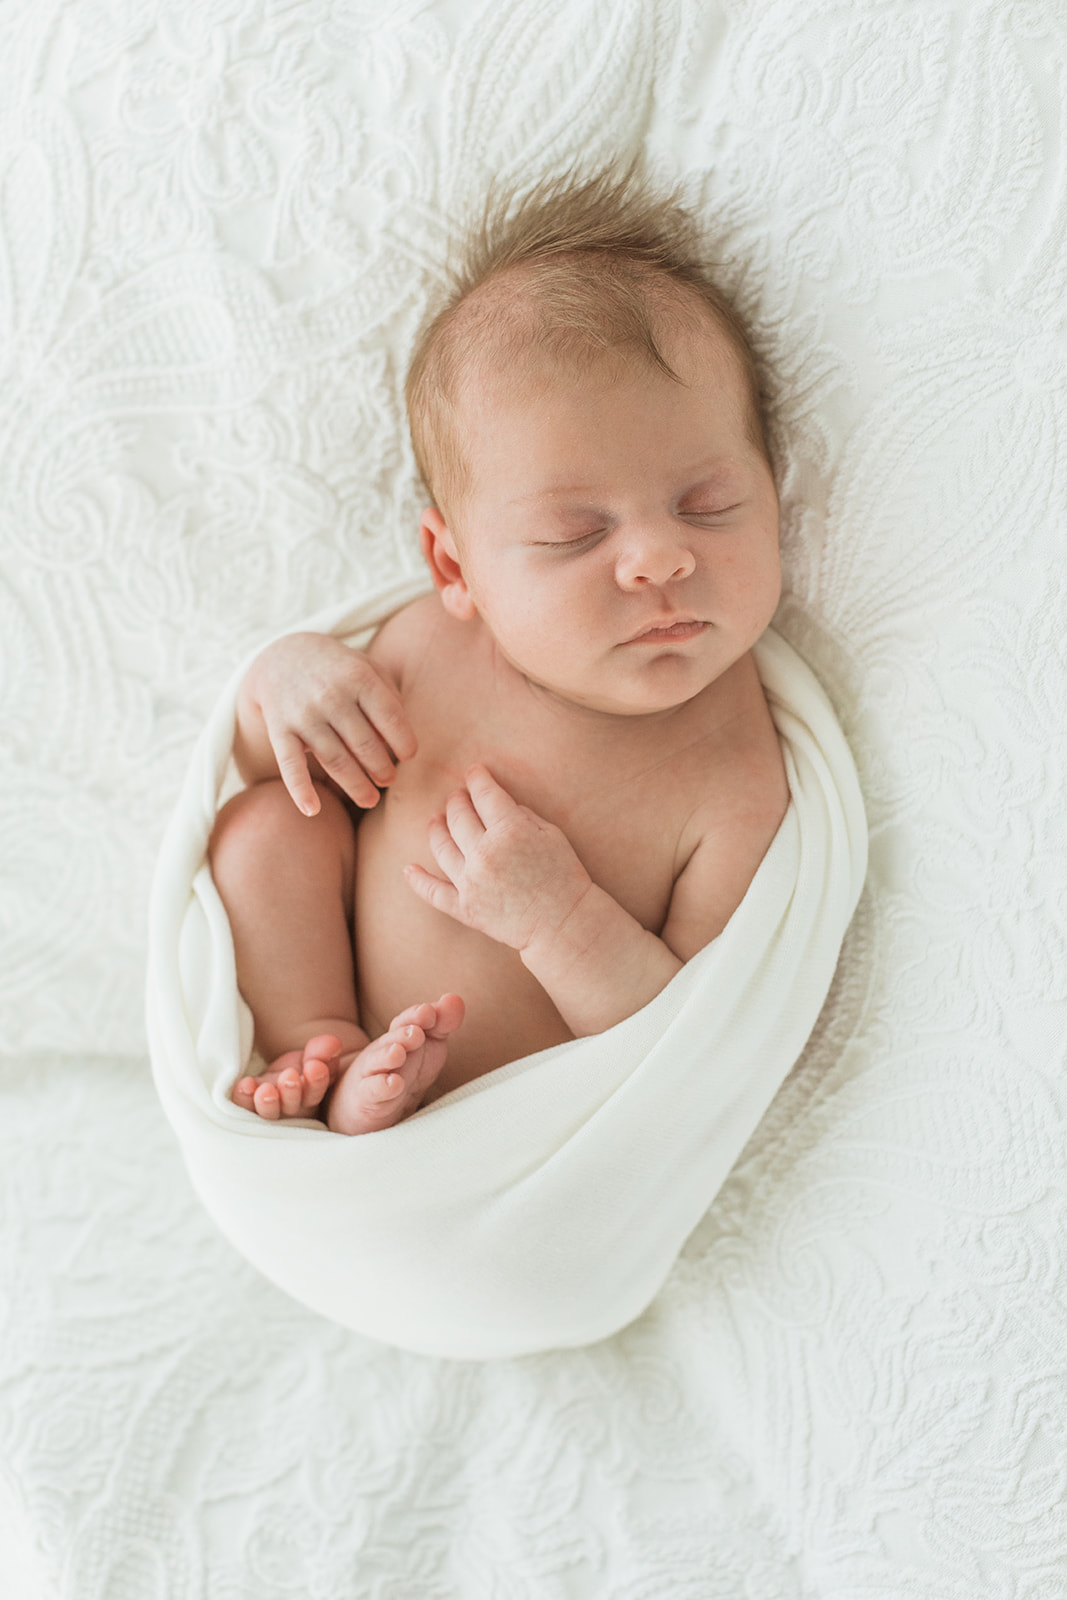 nashville newborn session. photo of newborn baby girl